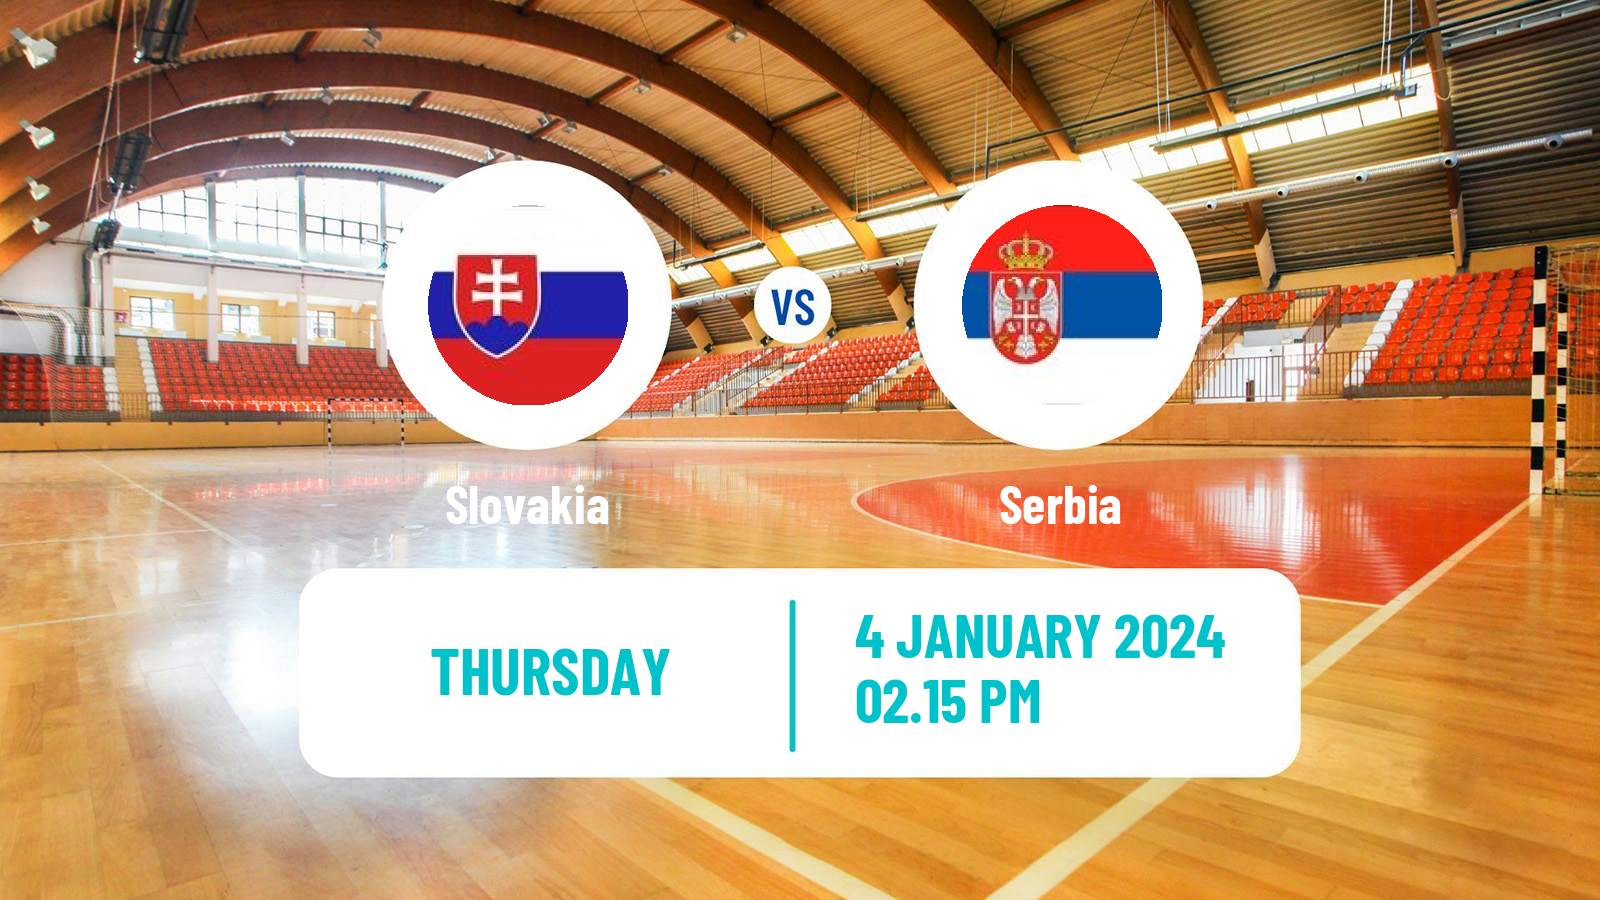 Handball Friendly International Handball Slovakia - Serbia